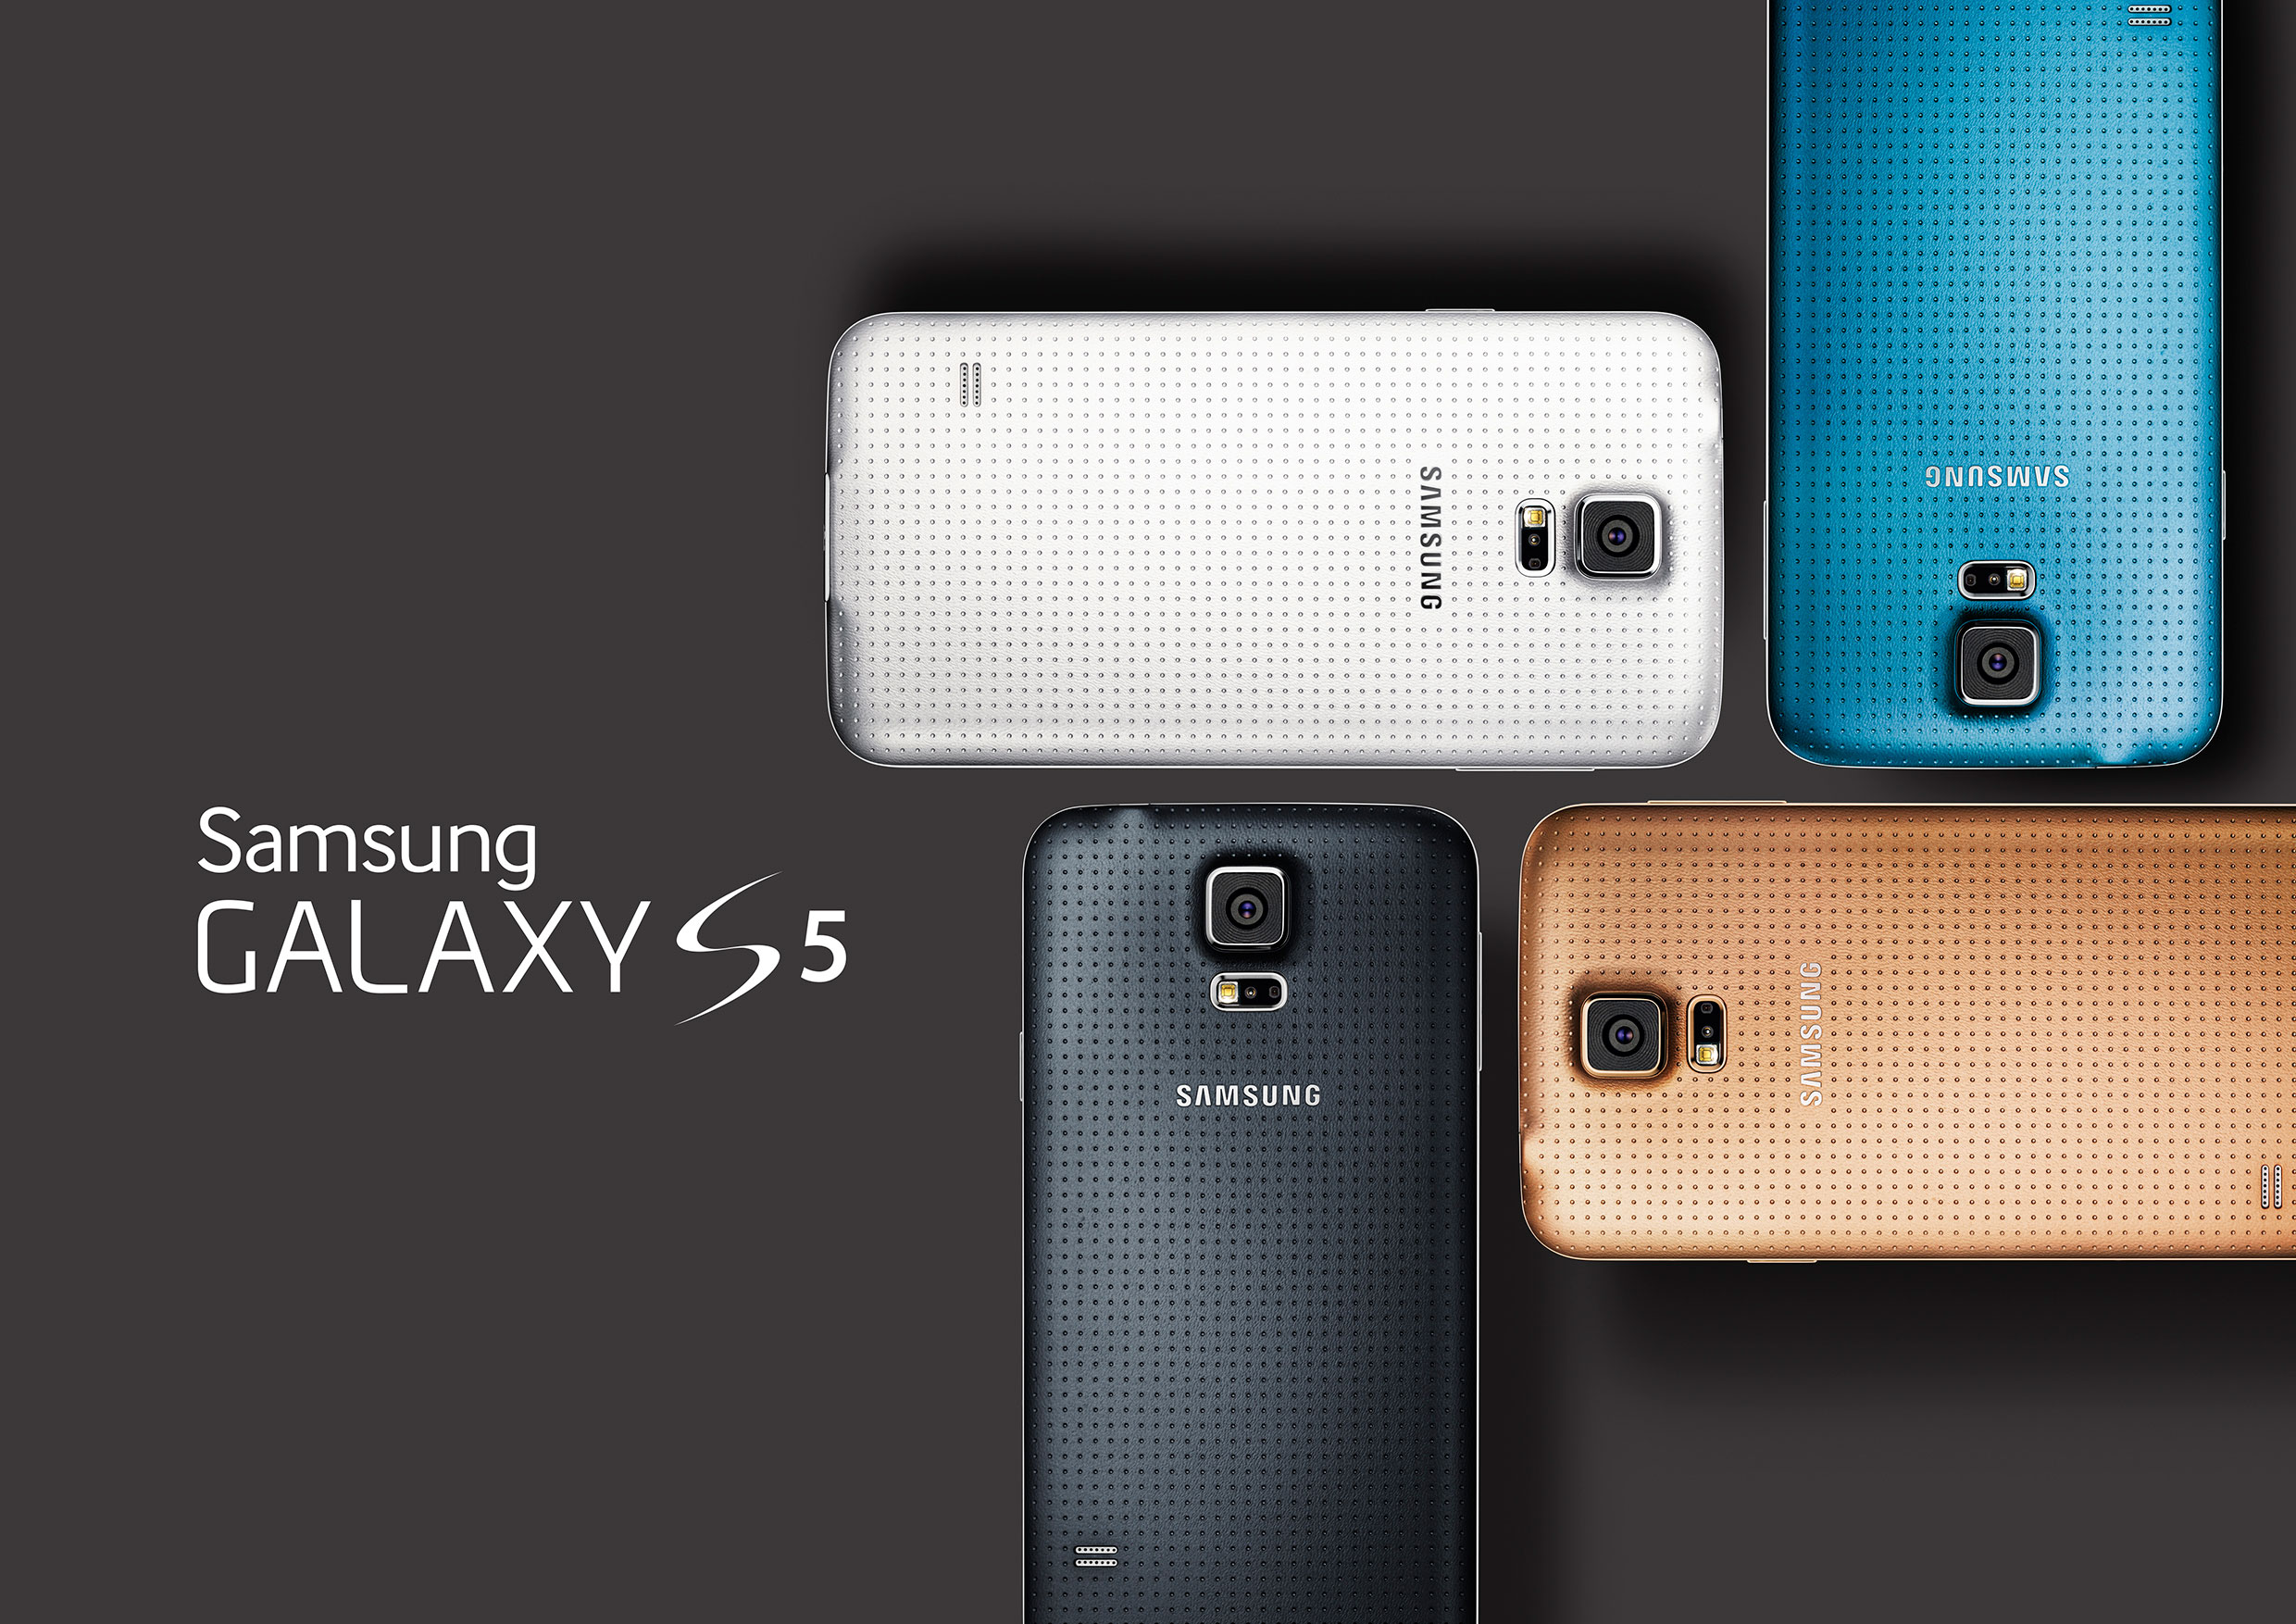 Glam Galaxy S5 Group31 | galaxy s5 | รวมรายละเอียด Samsung Galaxy S5: Snapdragon 801, กล้อง 16MP, แสกนลายนิ้วมือ, เซนเซอร์วัดชีพจรและกันฝุ่นกันน้ำ